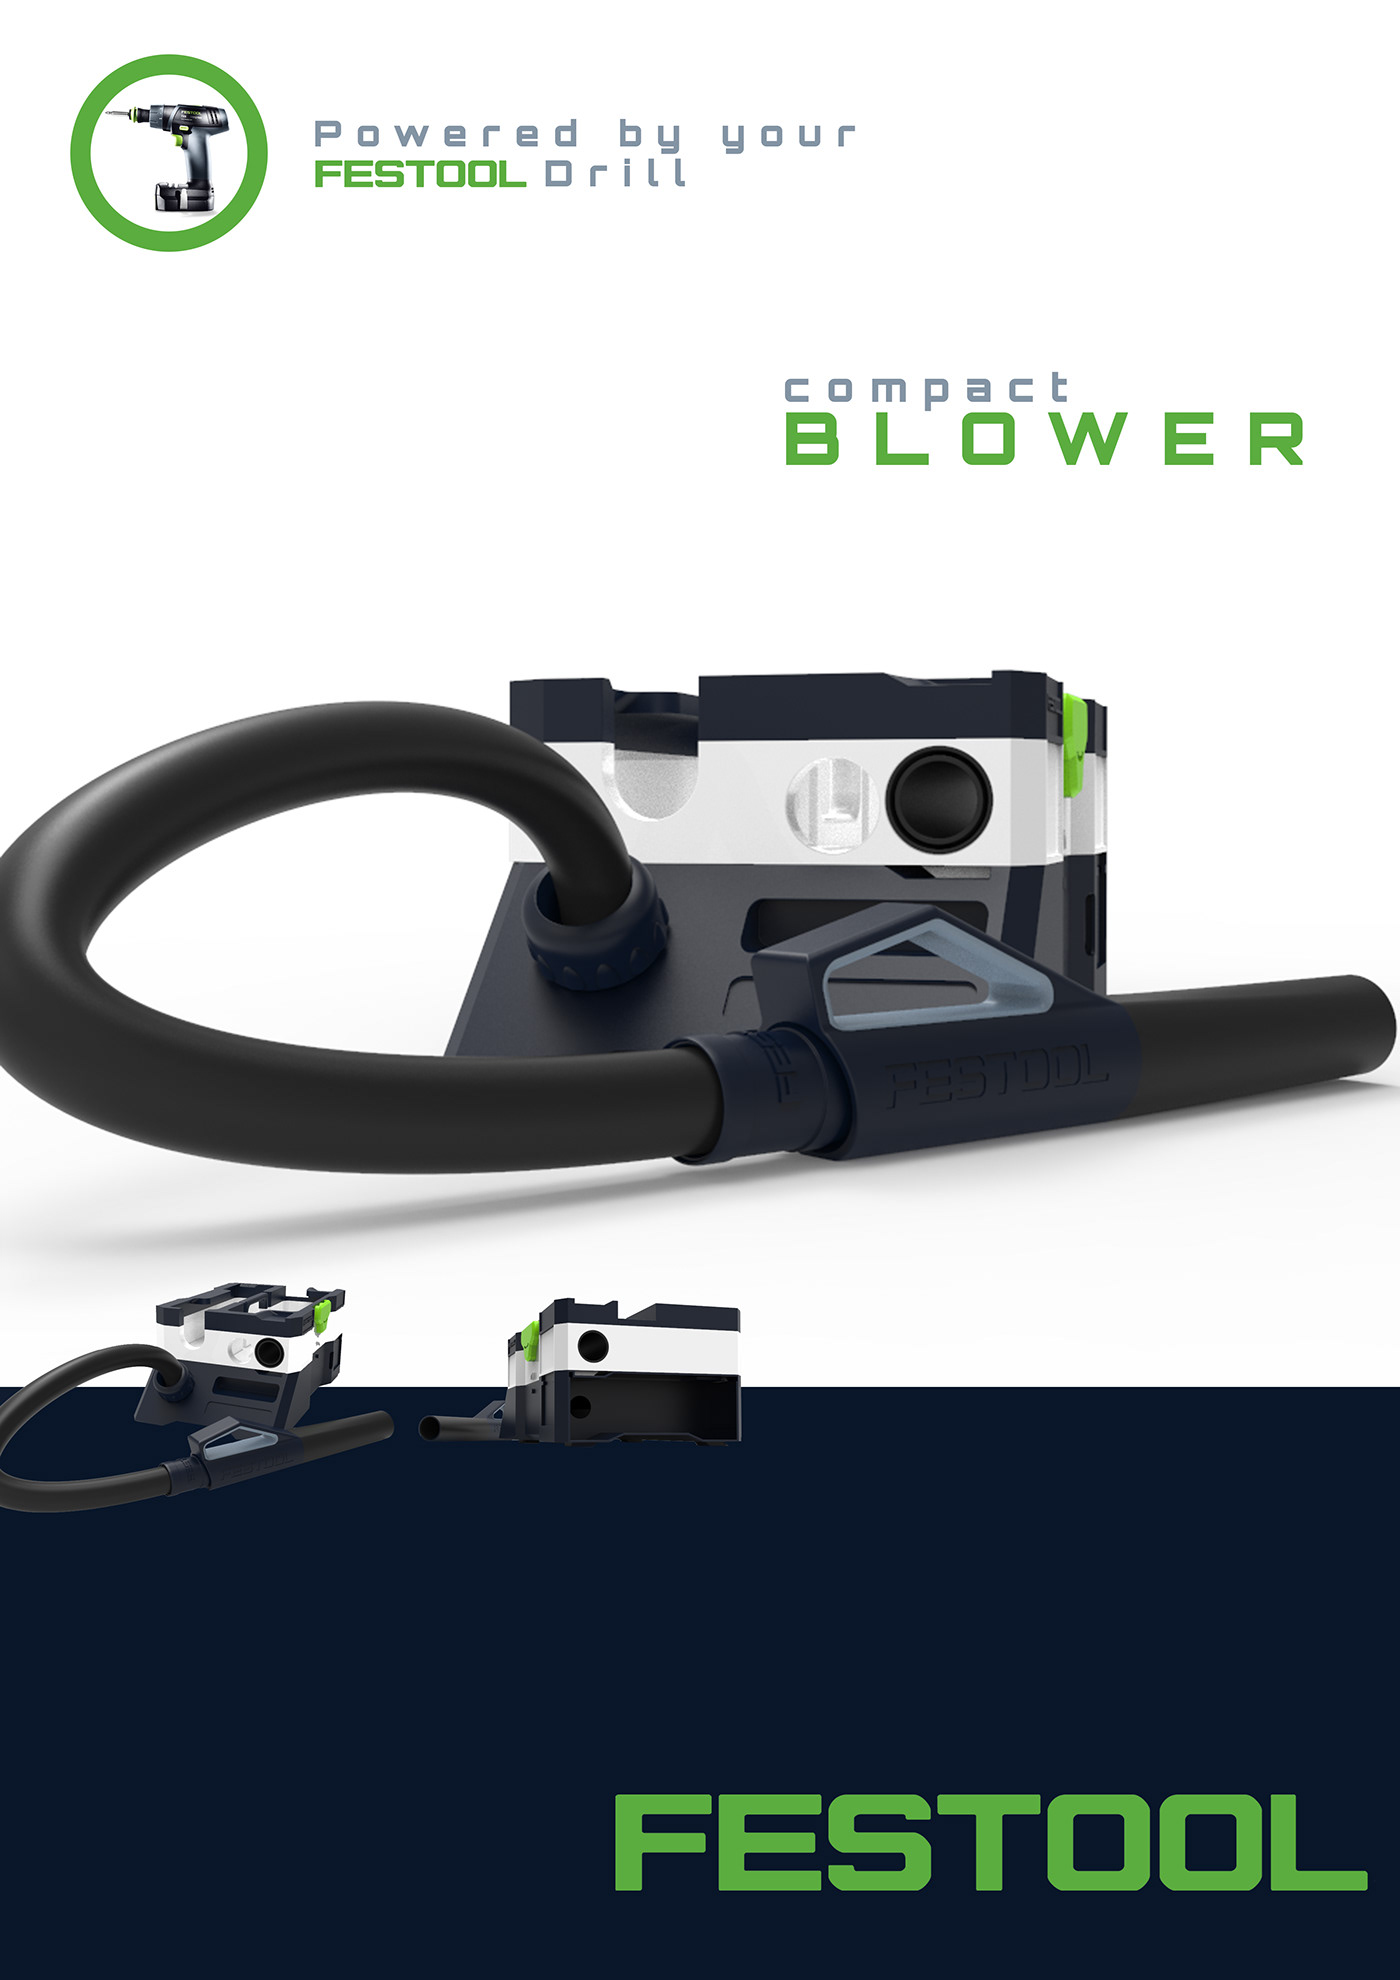 Festool leaf blower drill product video Blower compact Ryan Walters Innovative